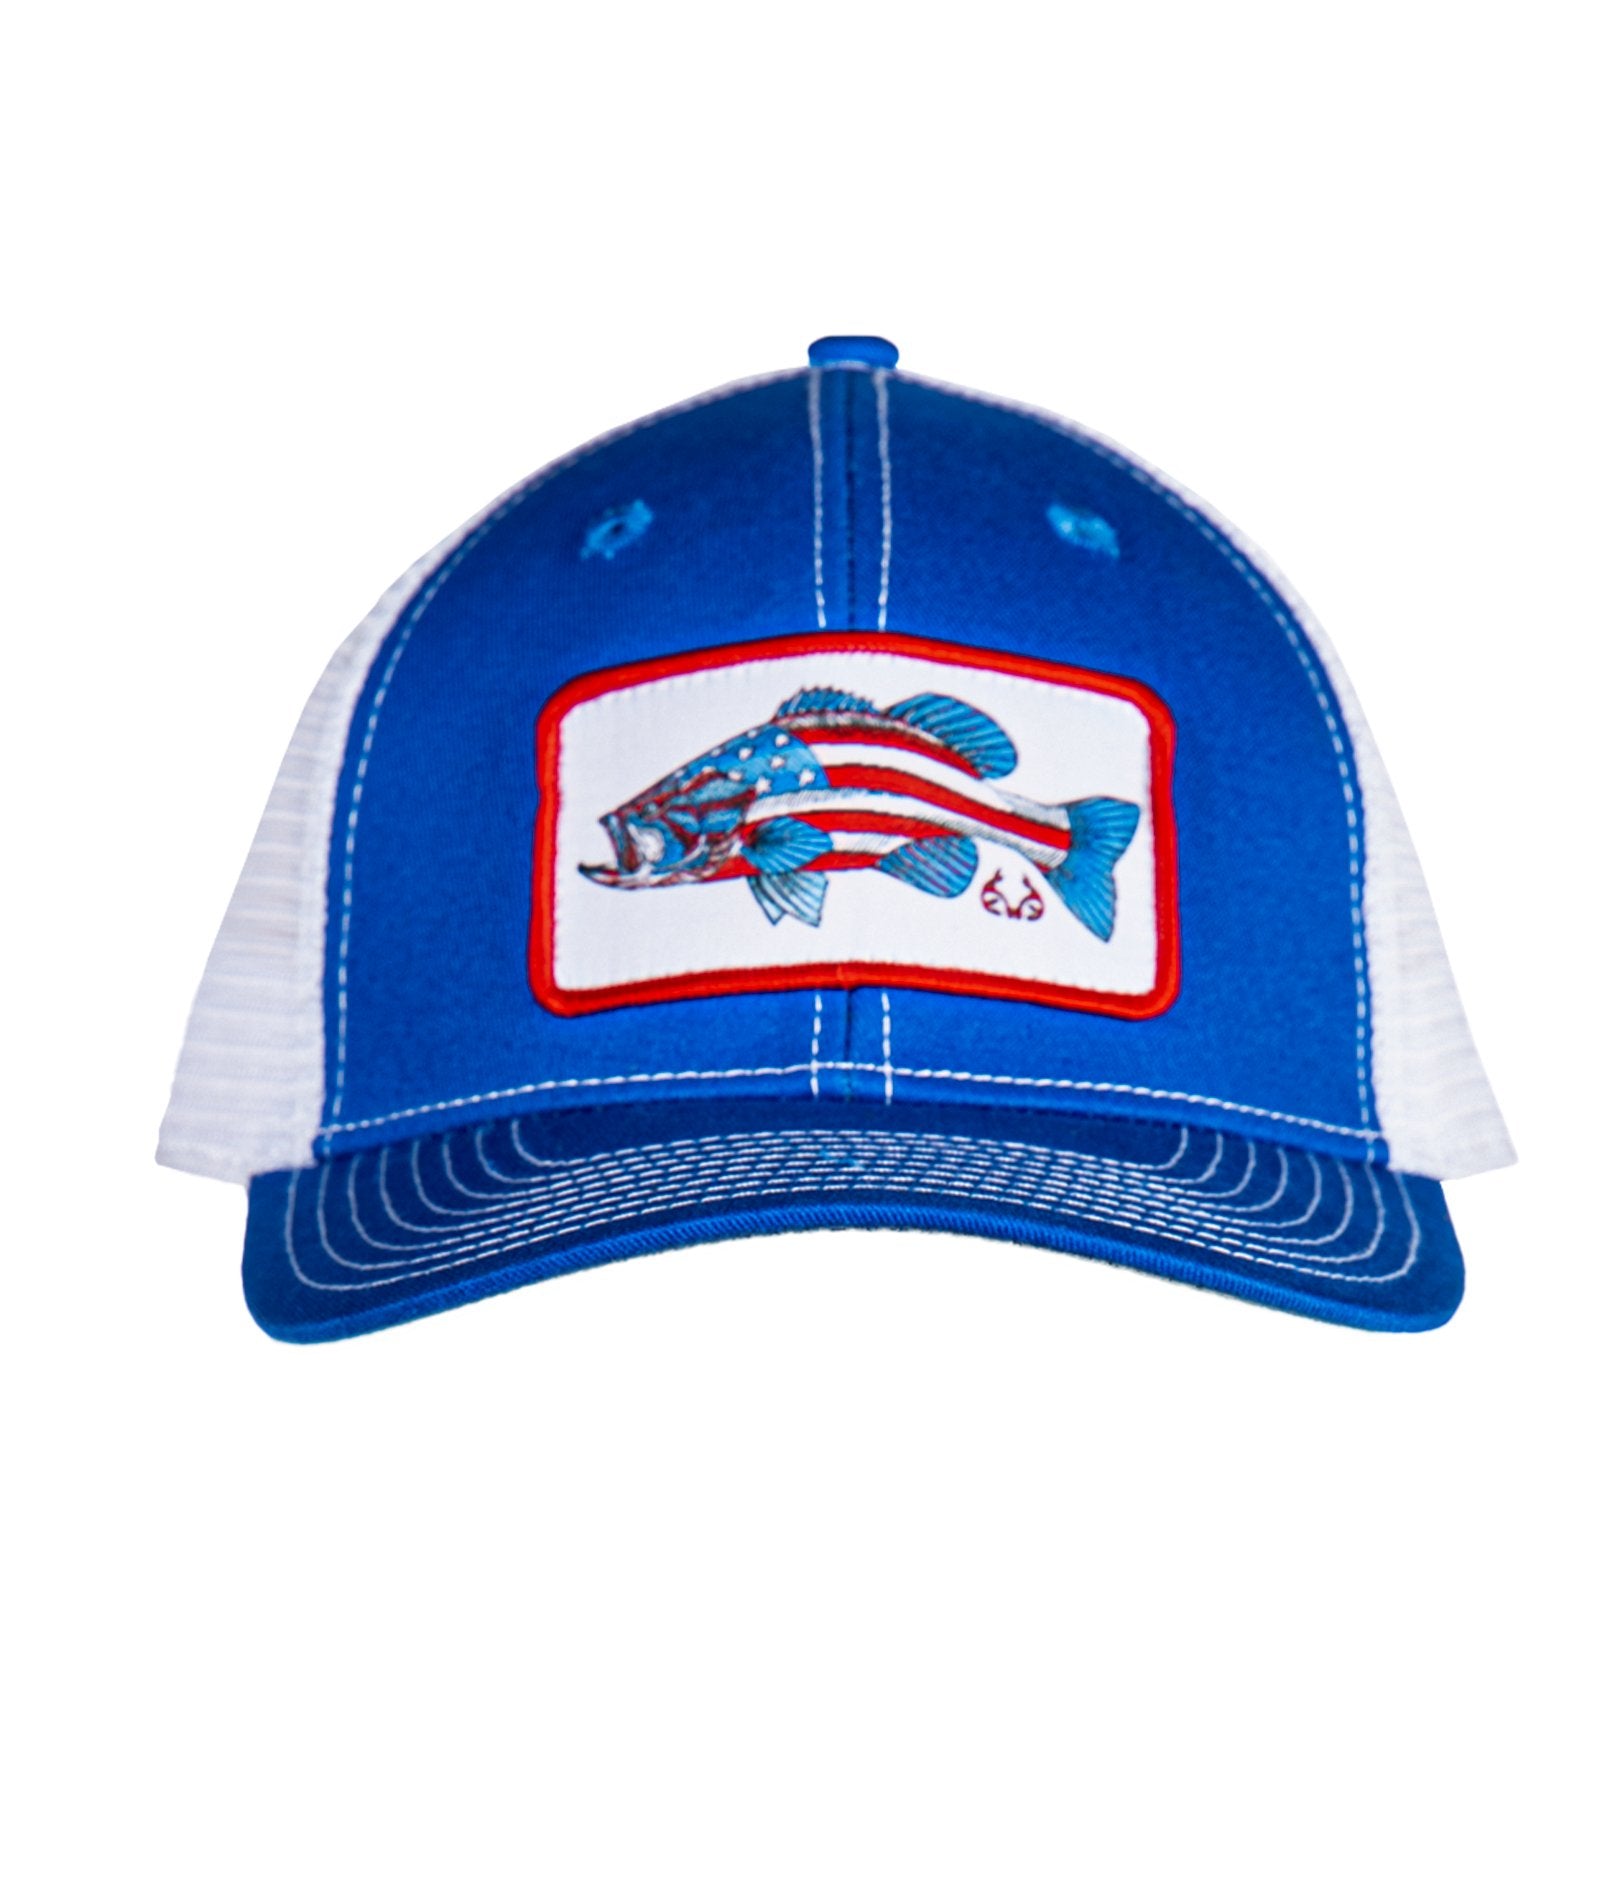 Realtree AmeriBass Trucker Hat – Colosseum Athletics